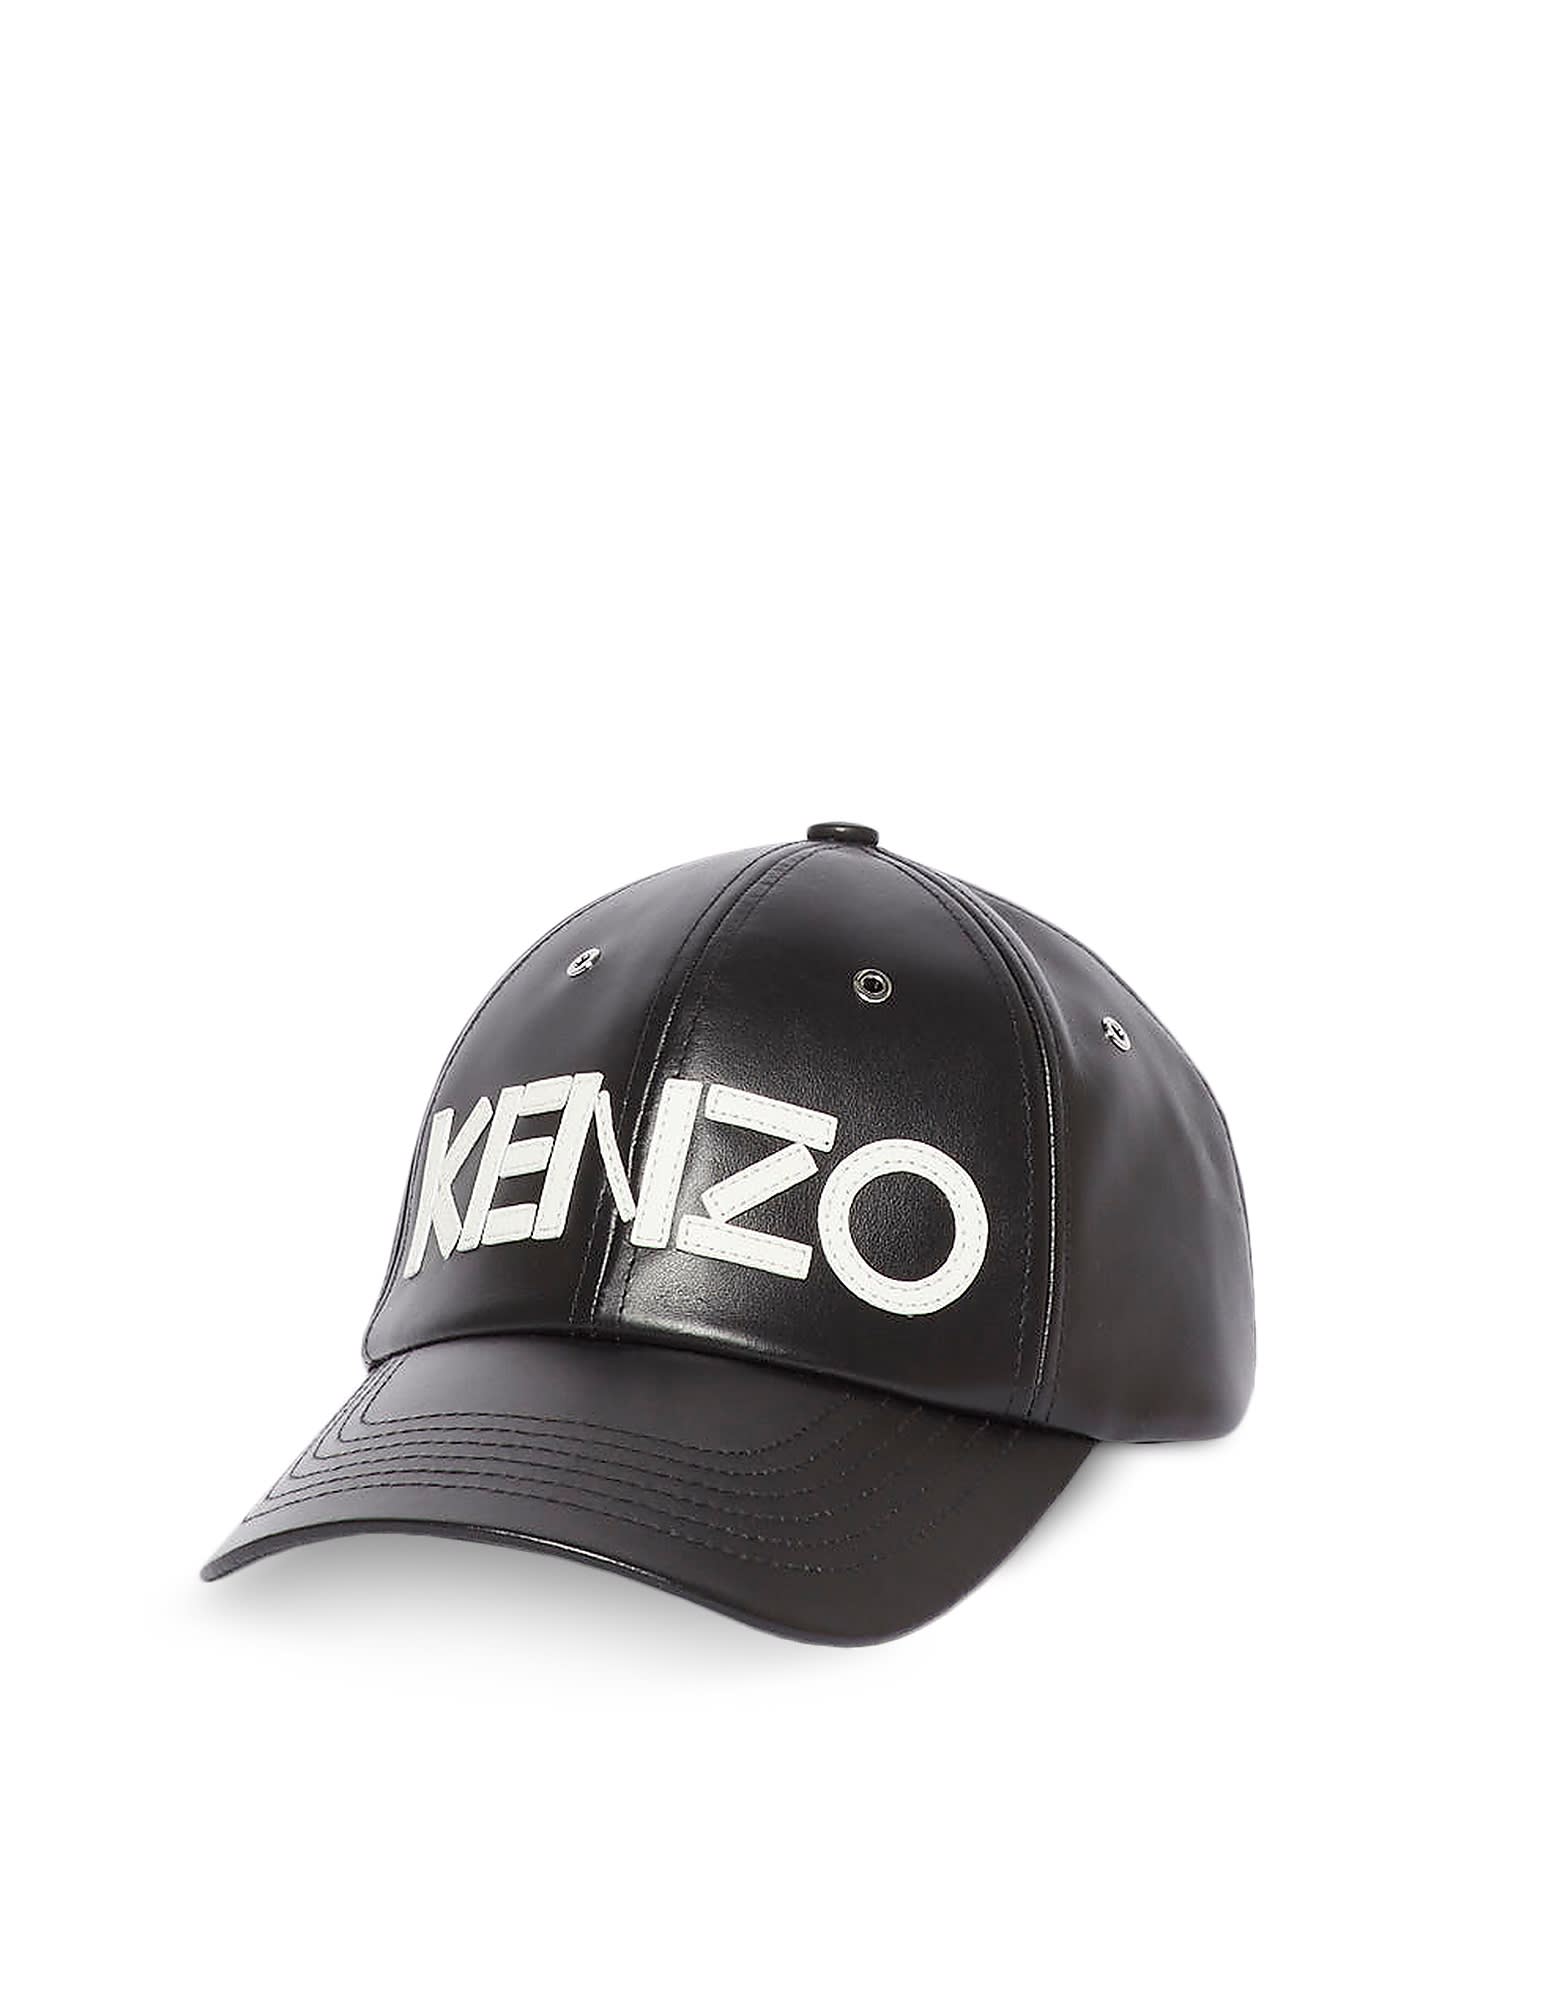 kenzo hat black